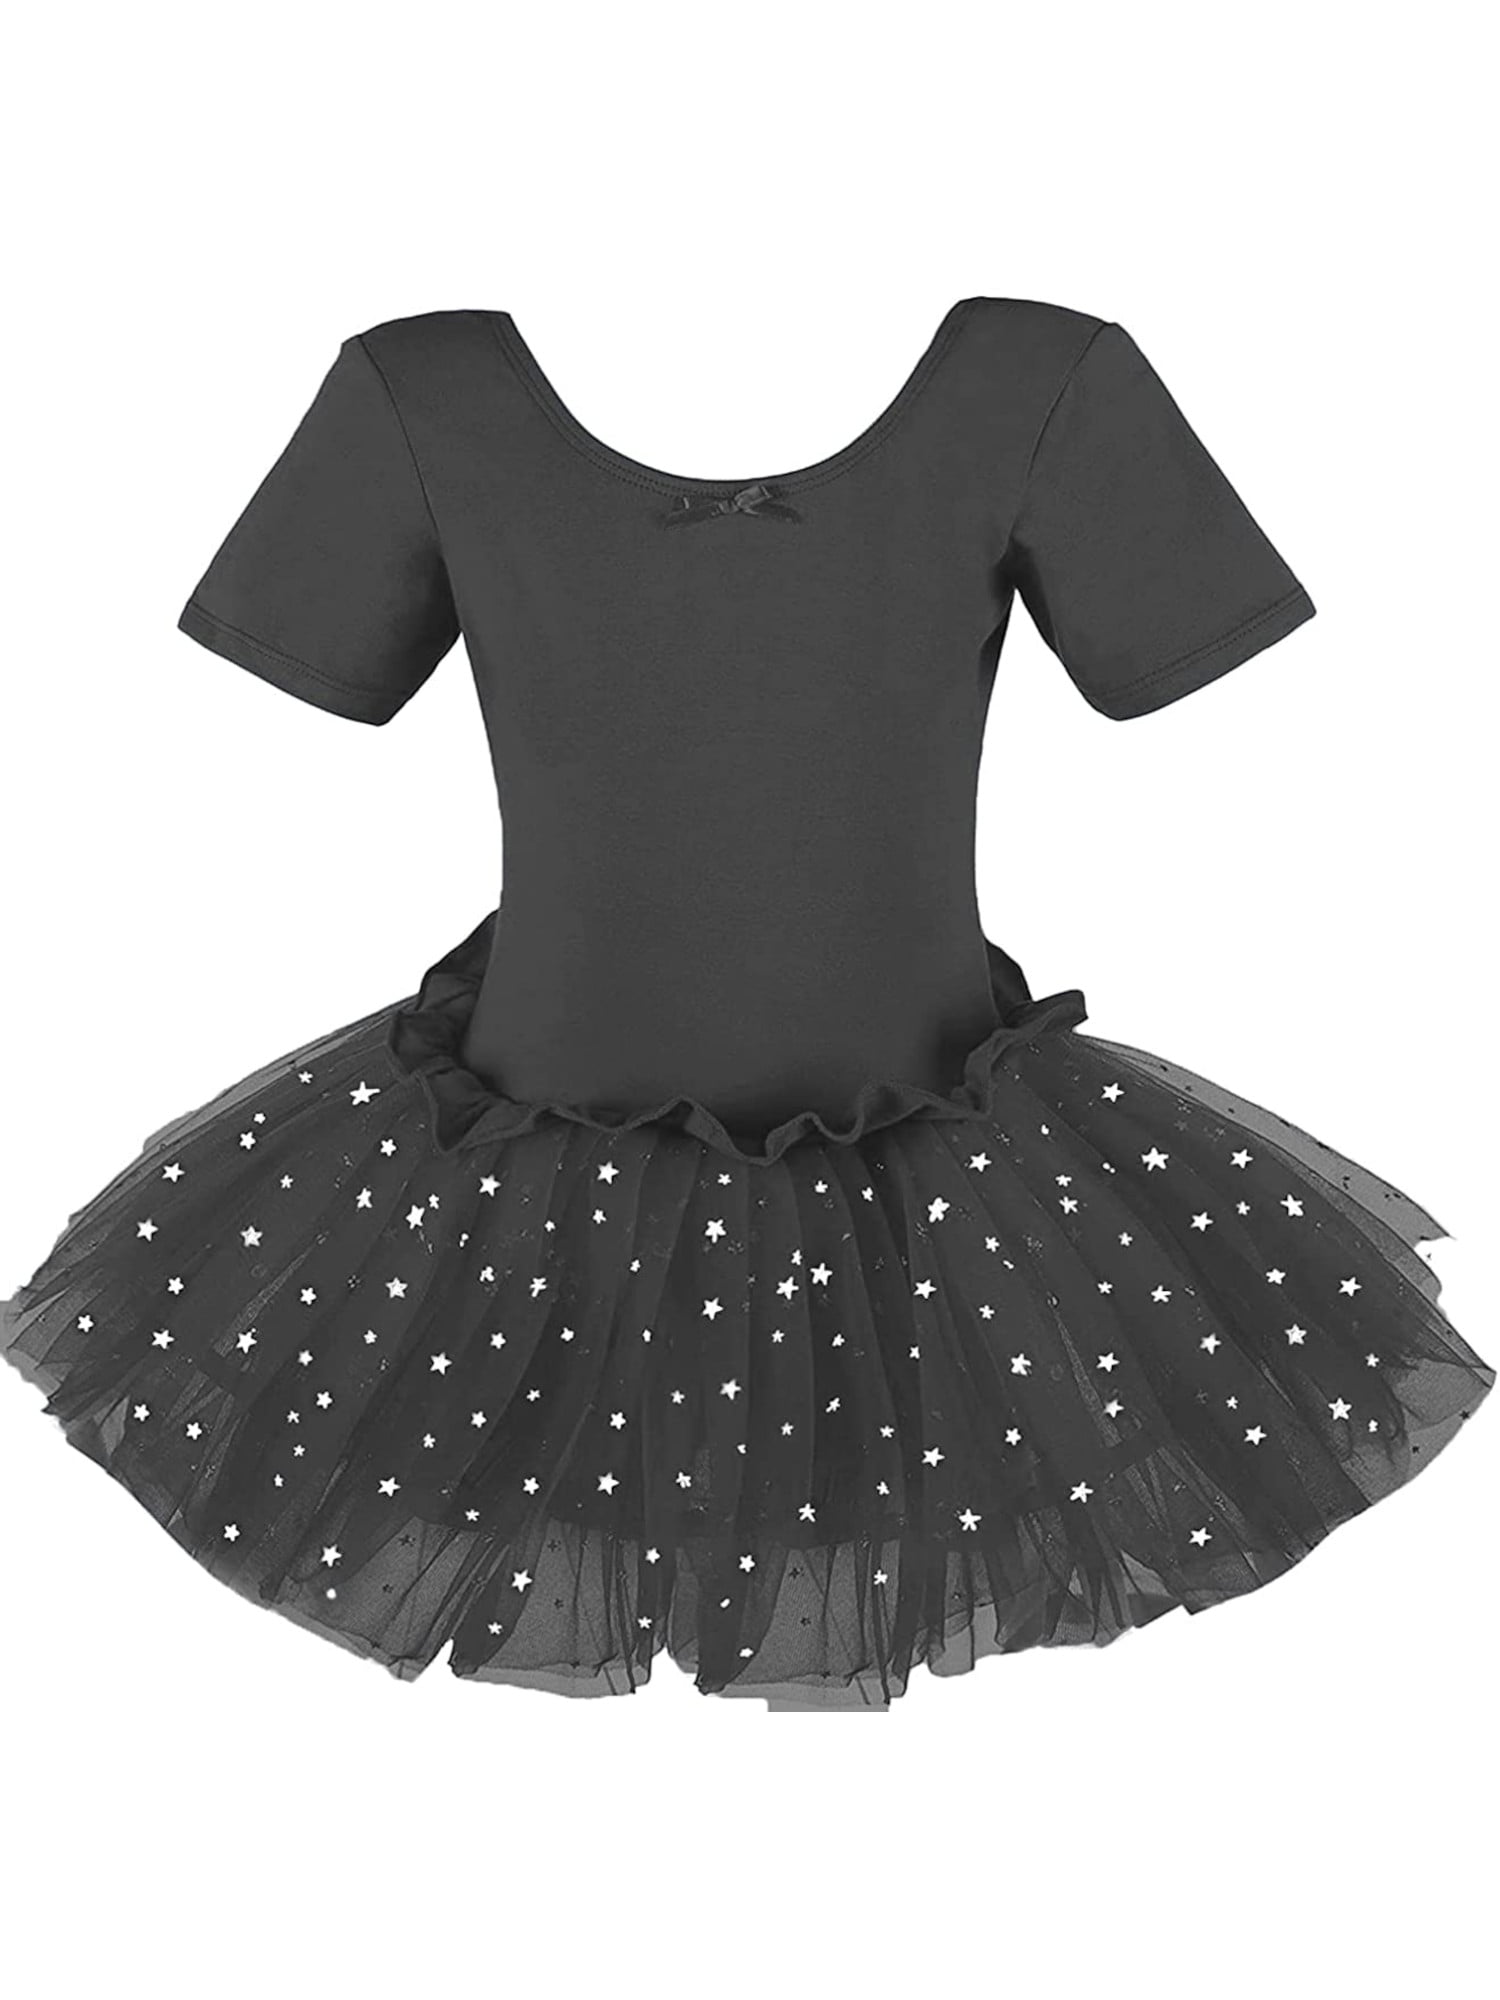 Kids4ever Girls Ballet Leotards for Dance 3-11T Kids Ruffle Short Sleeve Gymnastics Tutu Dress with Sparkle Skirt 